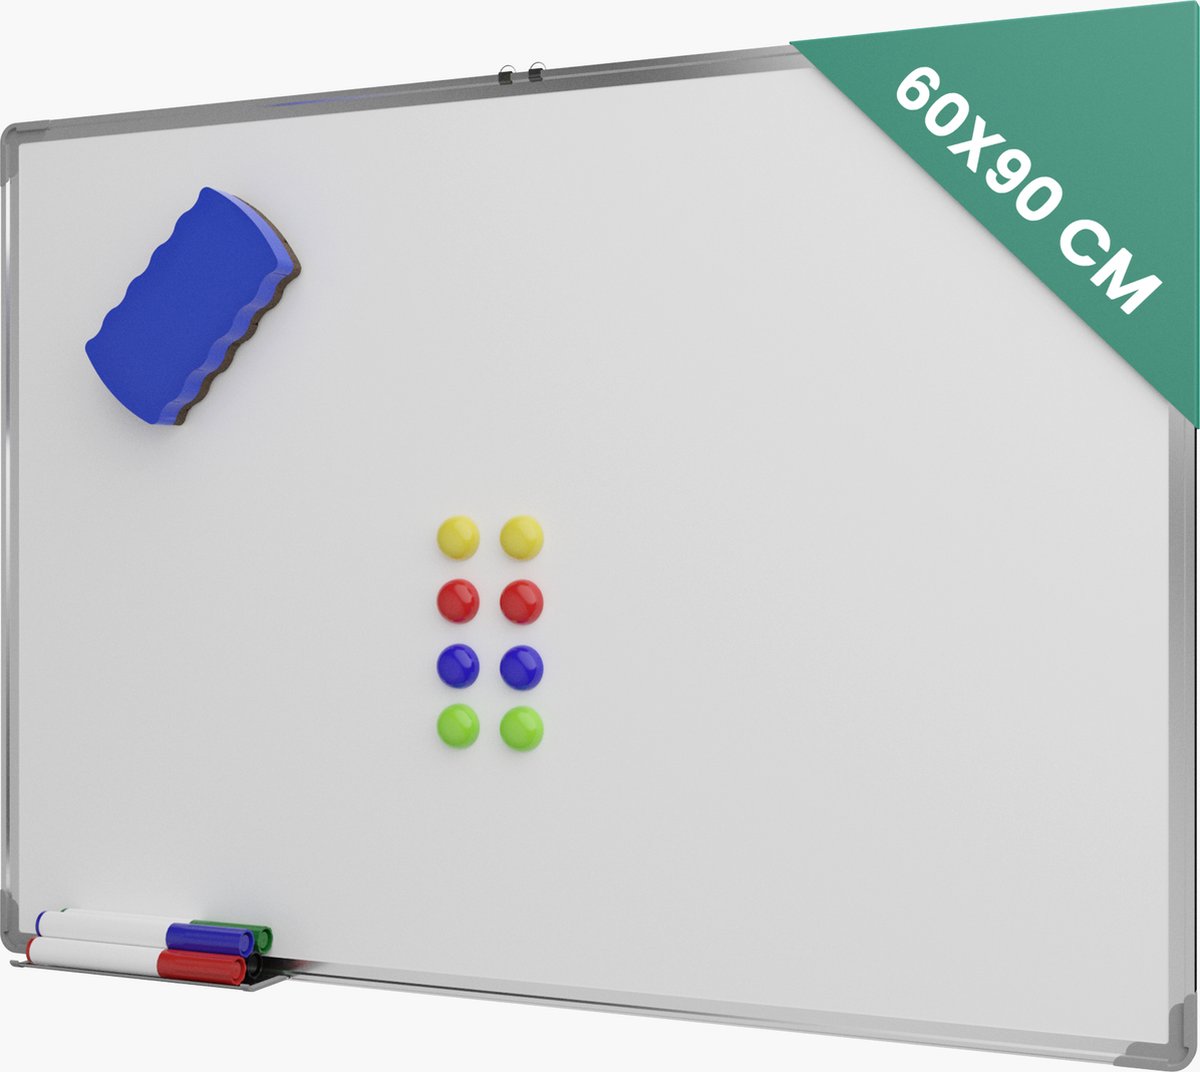 Avalo Whiteboard 60x90 cm - 14 in 1 set - Whiteboard Magnetisch inclusief Markers, Magneten & Wisser - Avalo